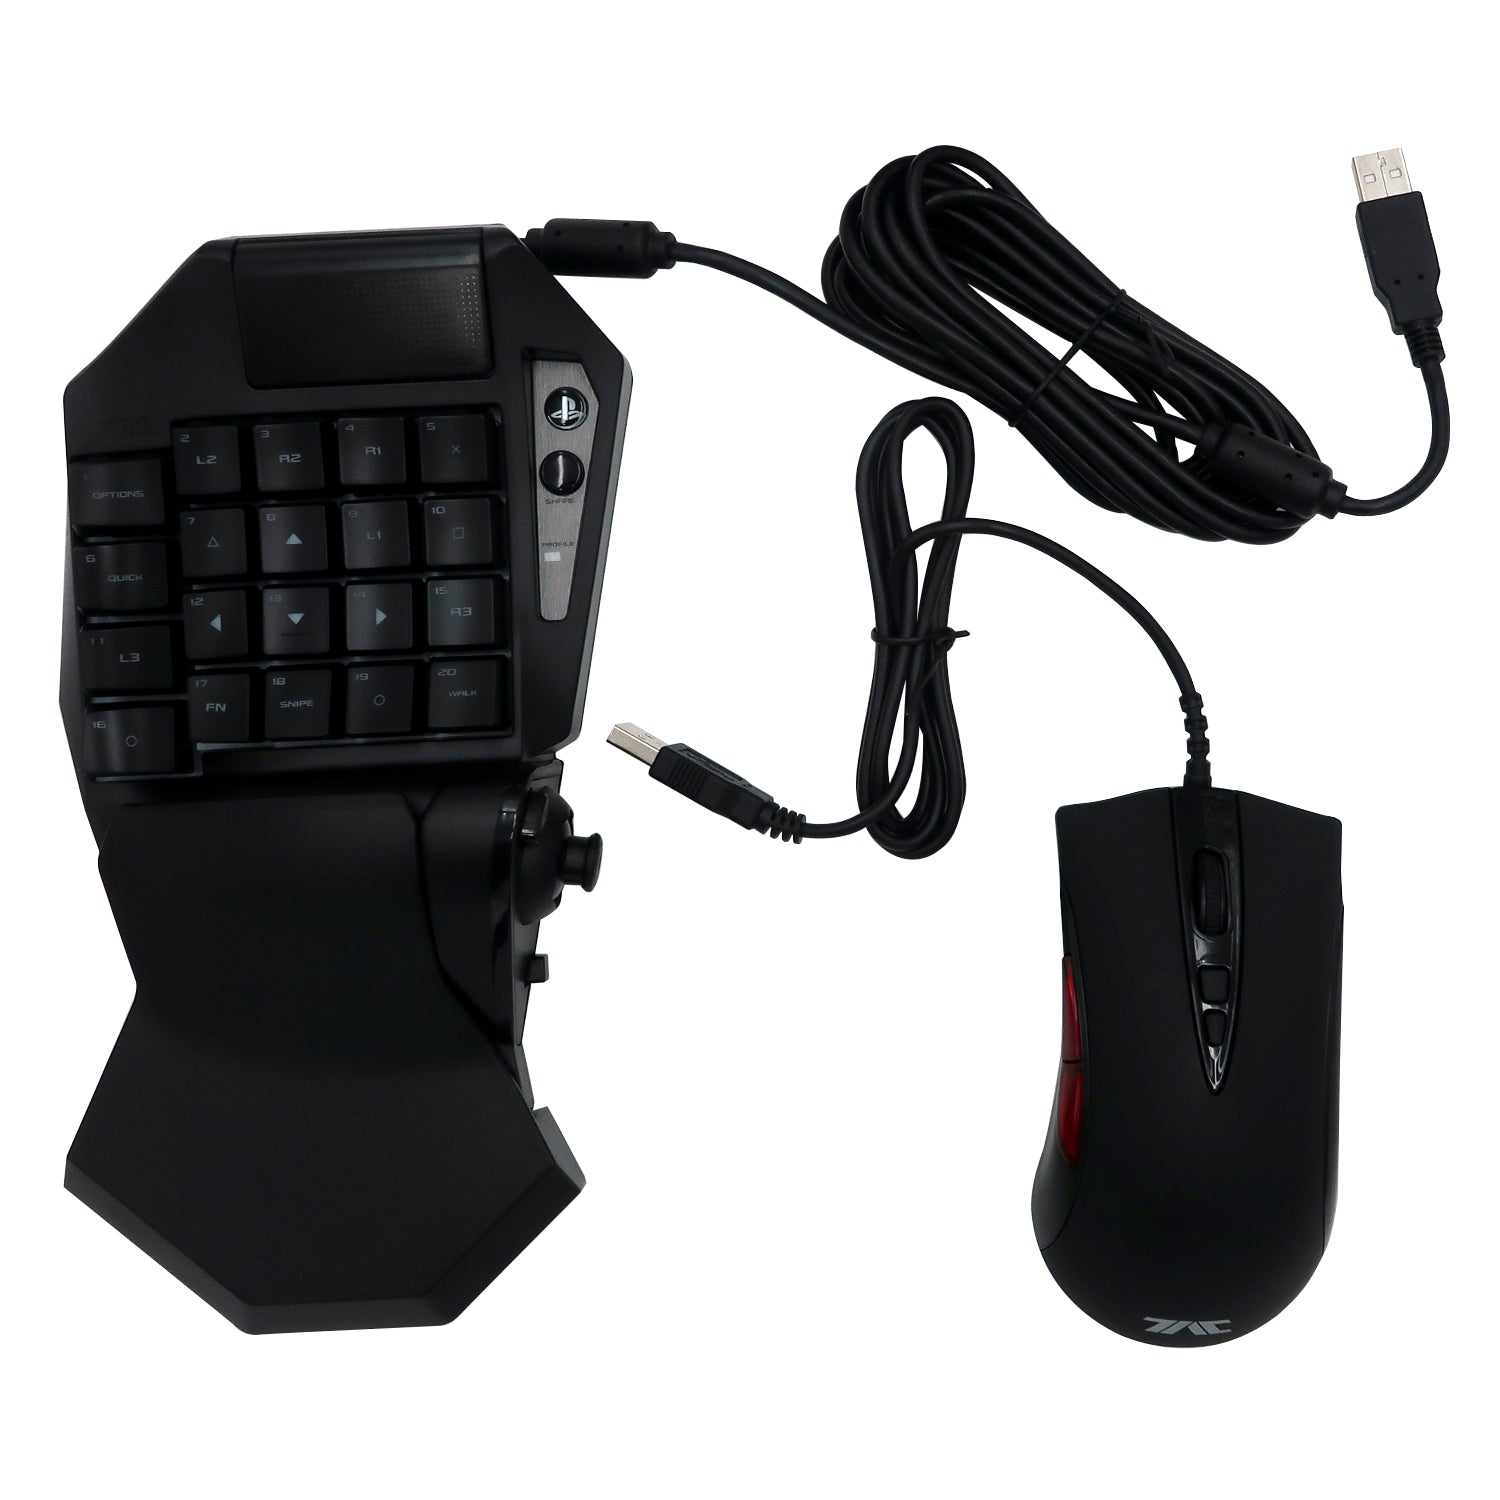 regering skruenøgle gå Hori Tactical Assault Commander KeyPad Type M2 for PS4/PS4/PC (PS4-119